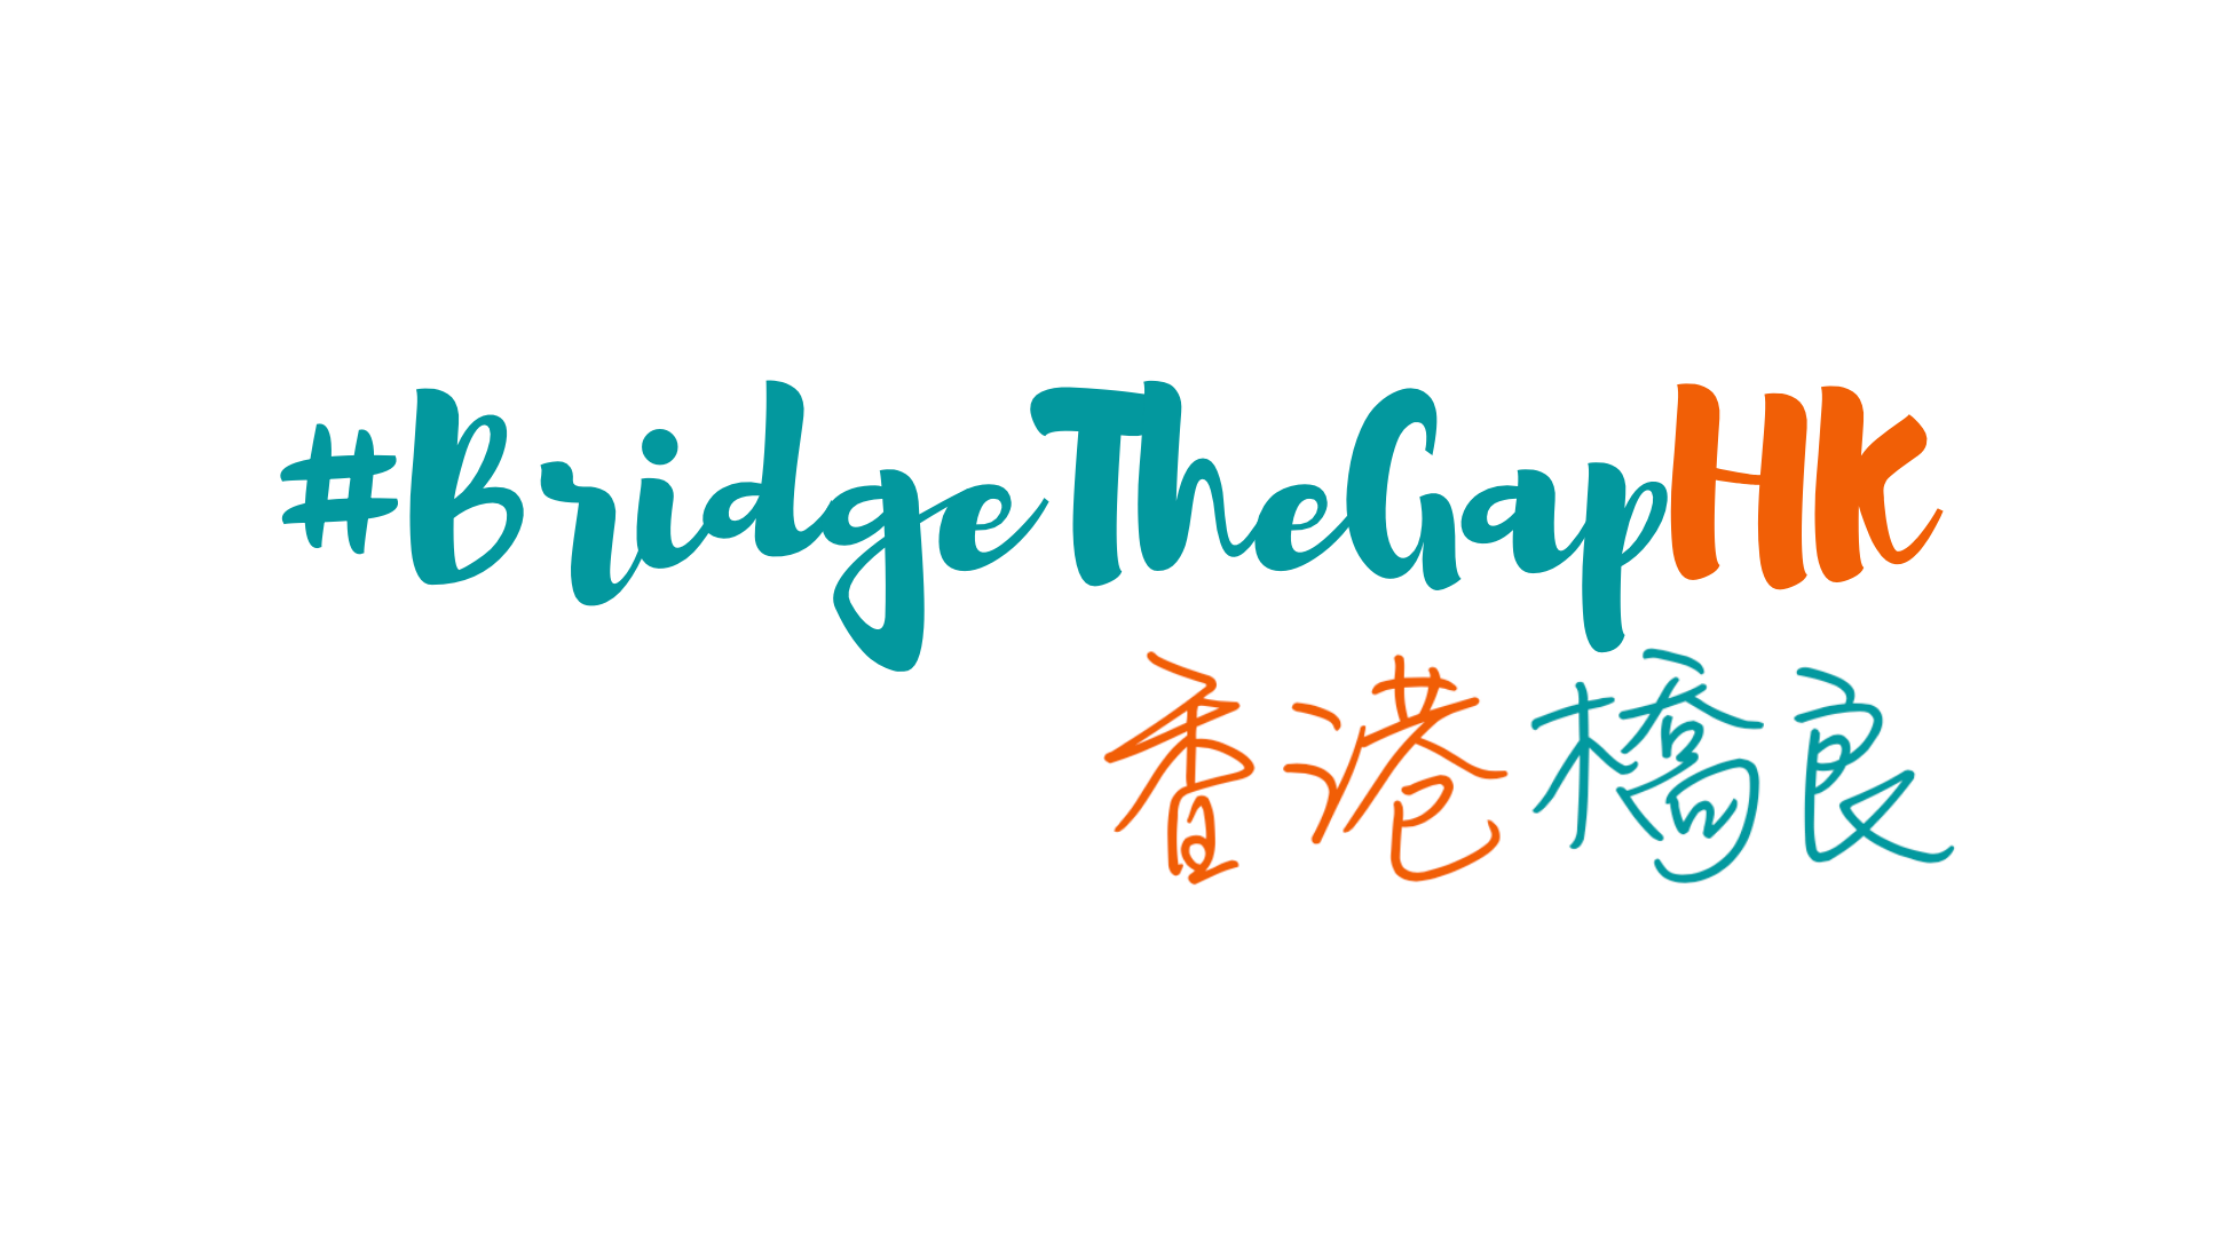 Bridge the Gap HK